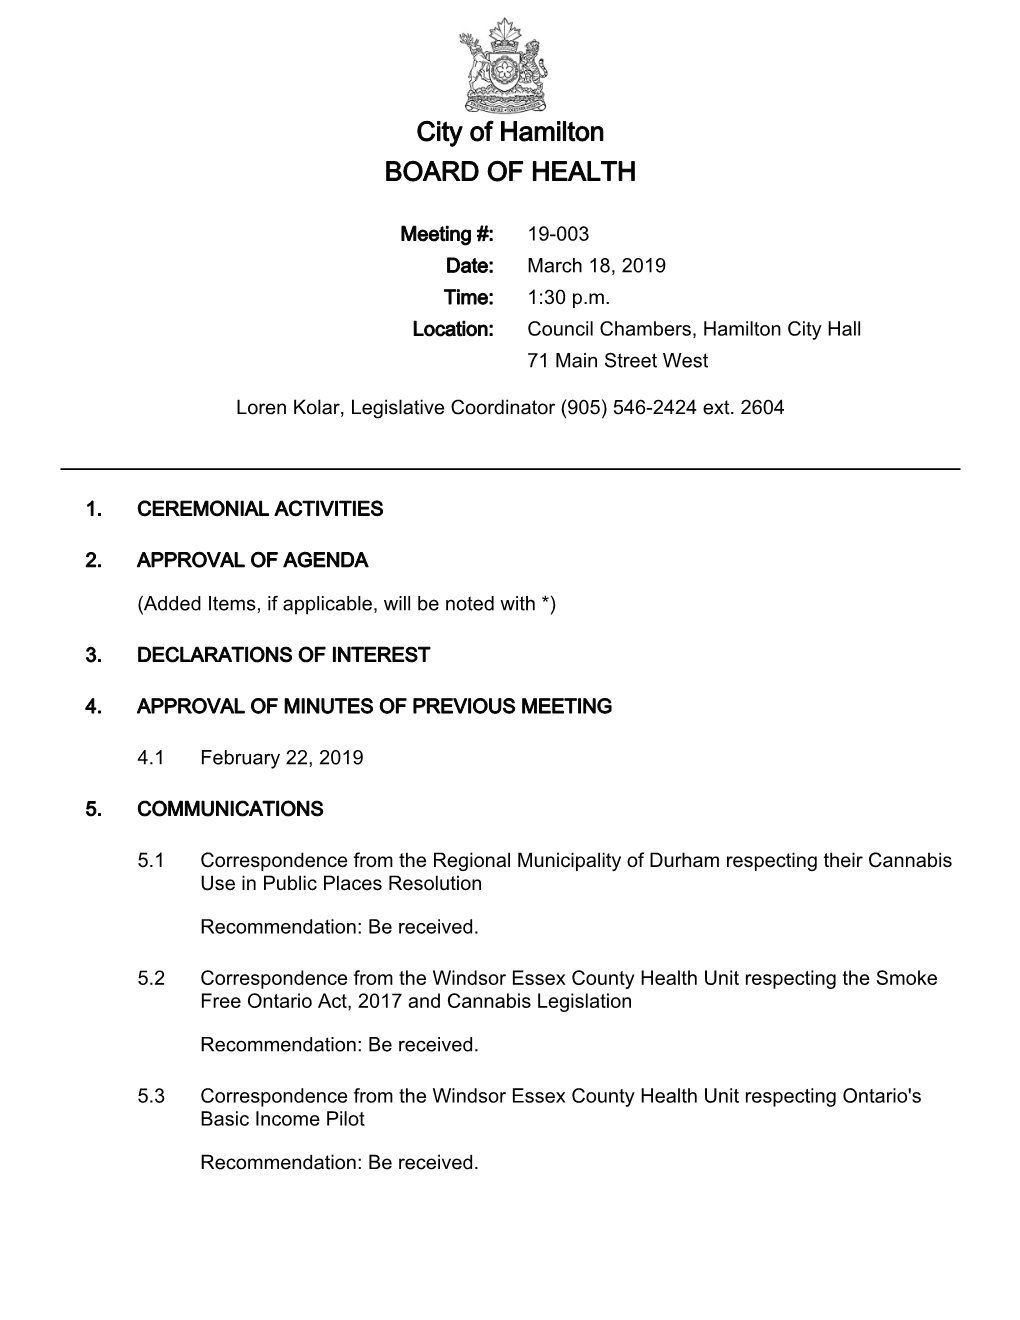 Board of Health Agenda Package